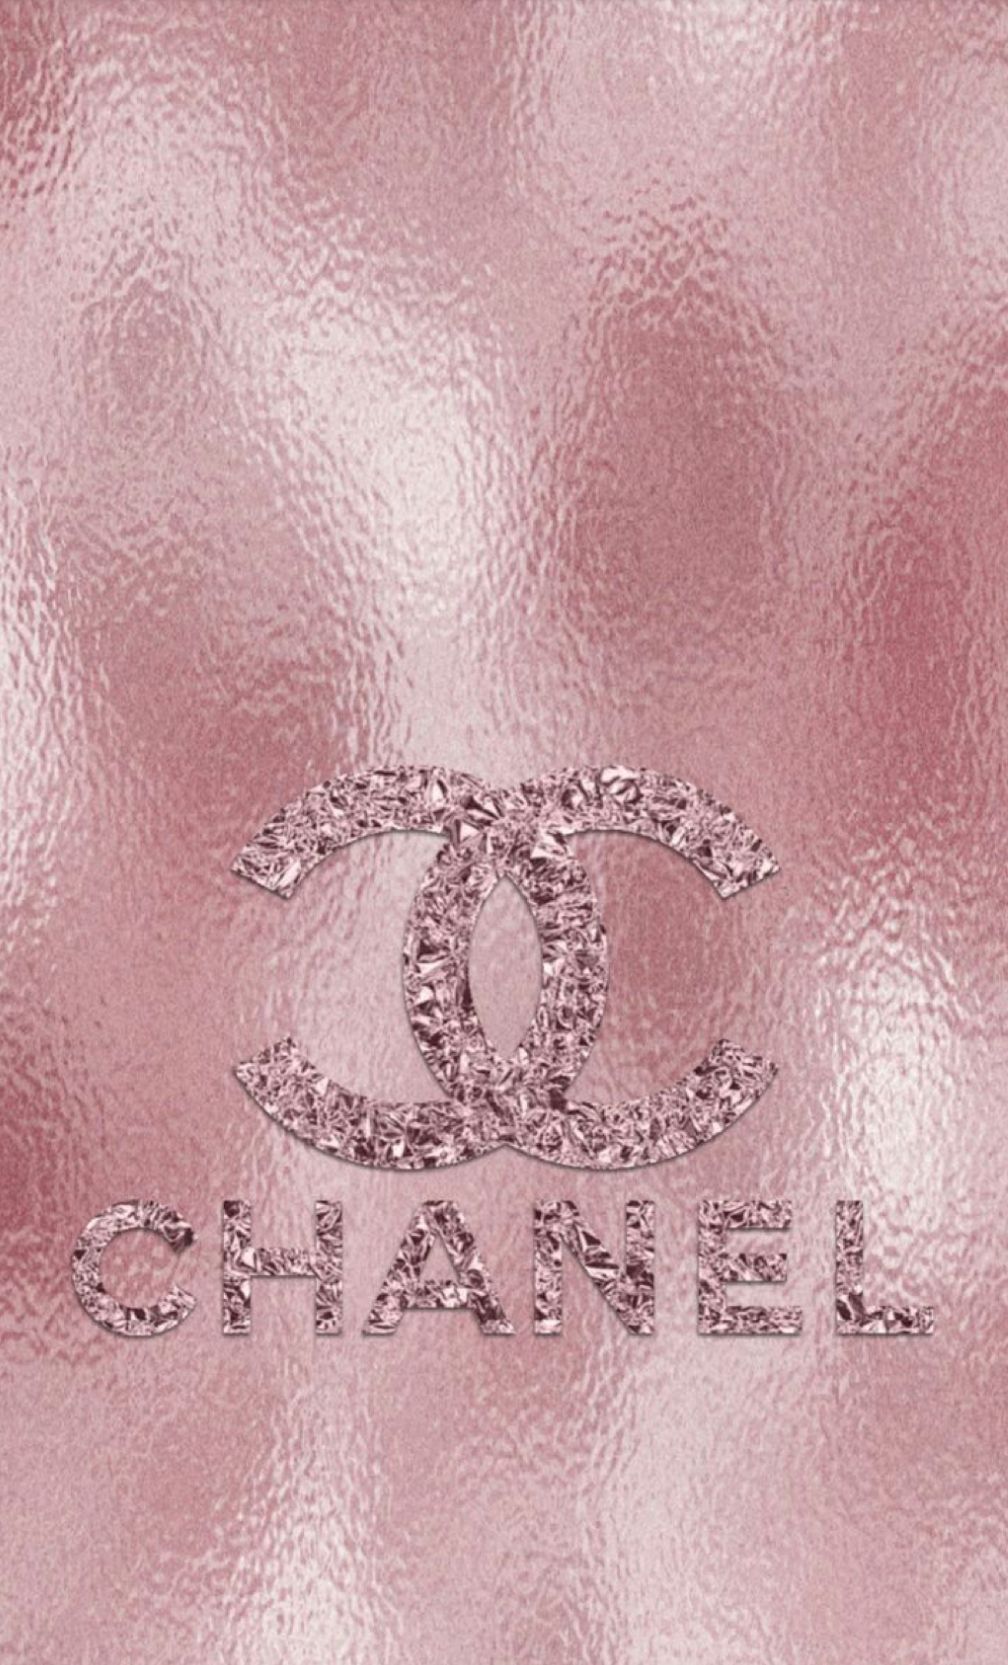 Cute Chanel Wallpaper - #Chanel #wallpaper #poster #background #glitter # pink - iPhone hintergrund rosa, Hintergrund iphone, Rosa hintergrundbild iphone